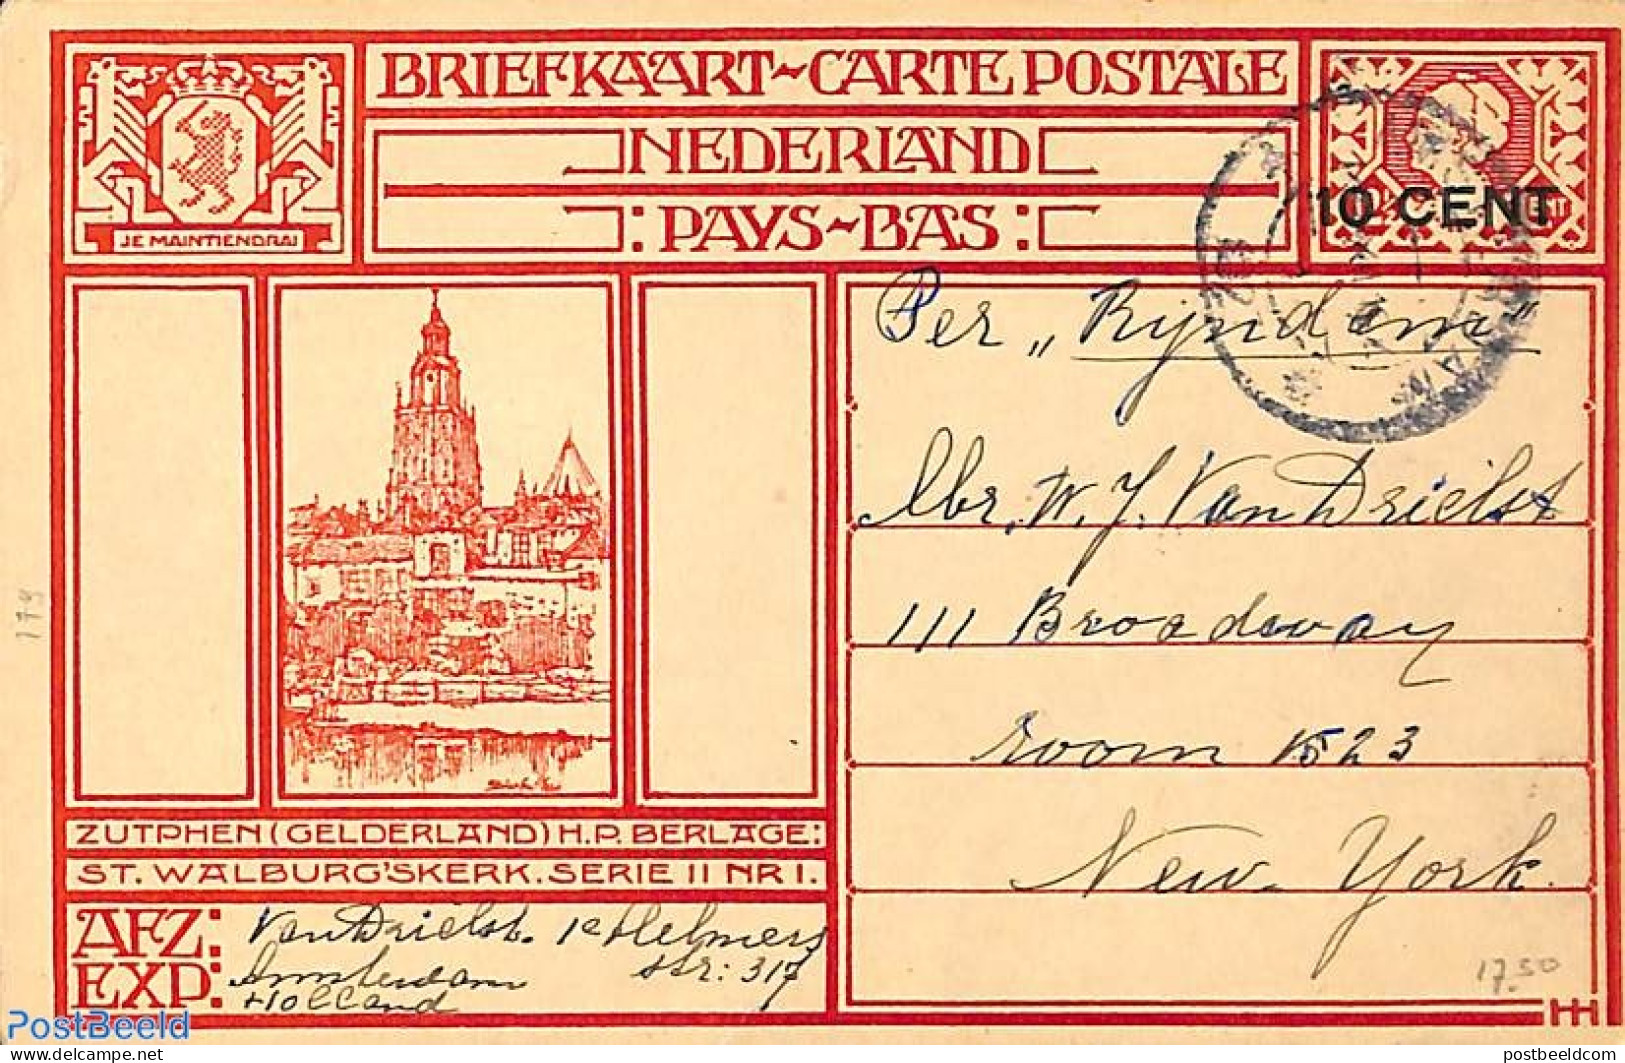 Netherlands 1926 Postcard 10c On 12.5c, Zutphen, Used Postal Stationary - Lettres & Documents